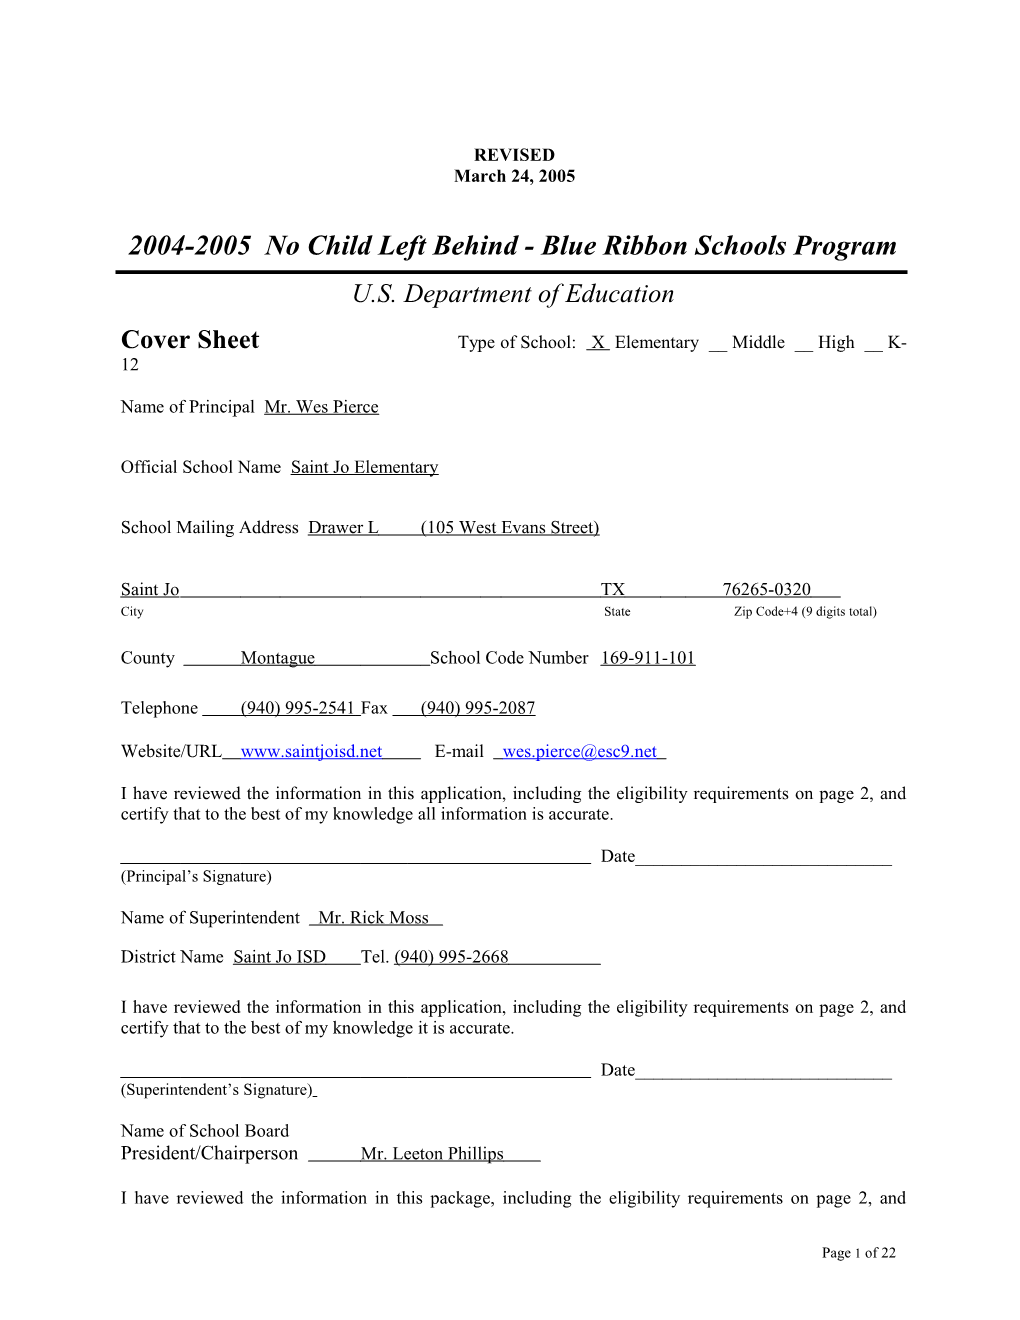 Saint Jo Elementary School Application: 2004-2005, No Child Left Behind - Blue Ribbon Schools